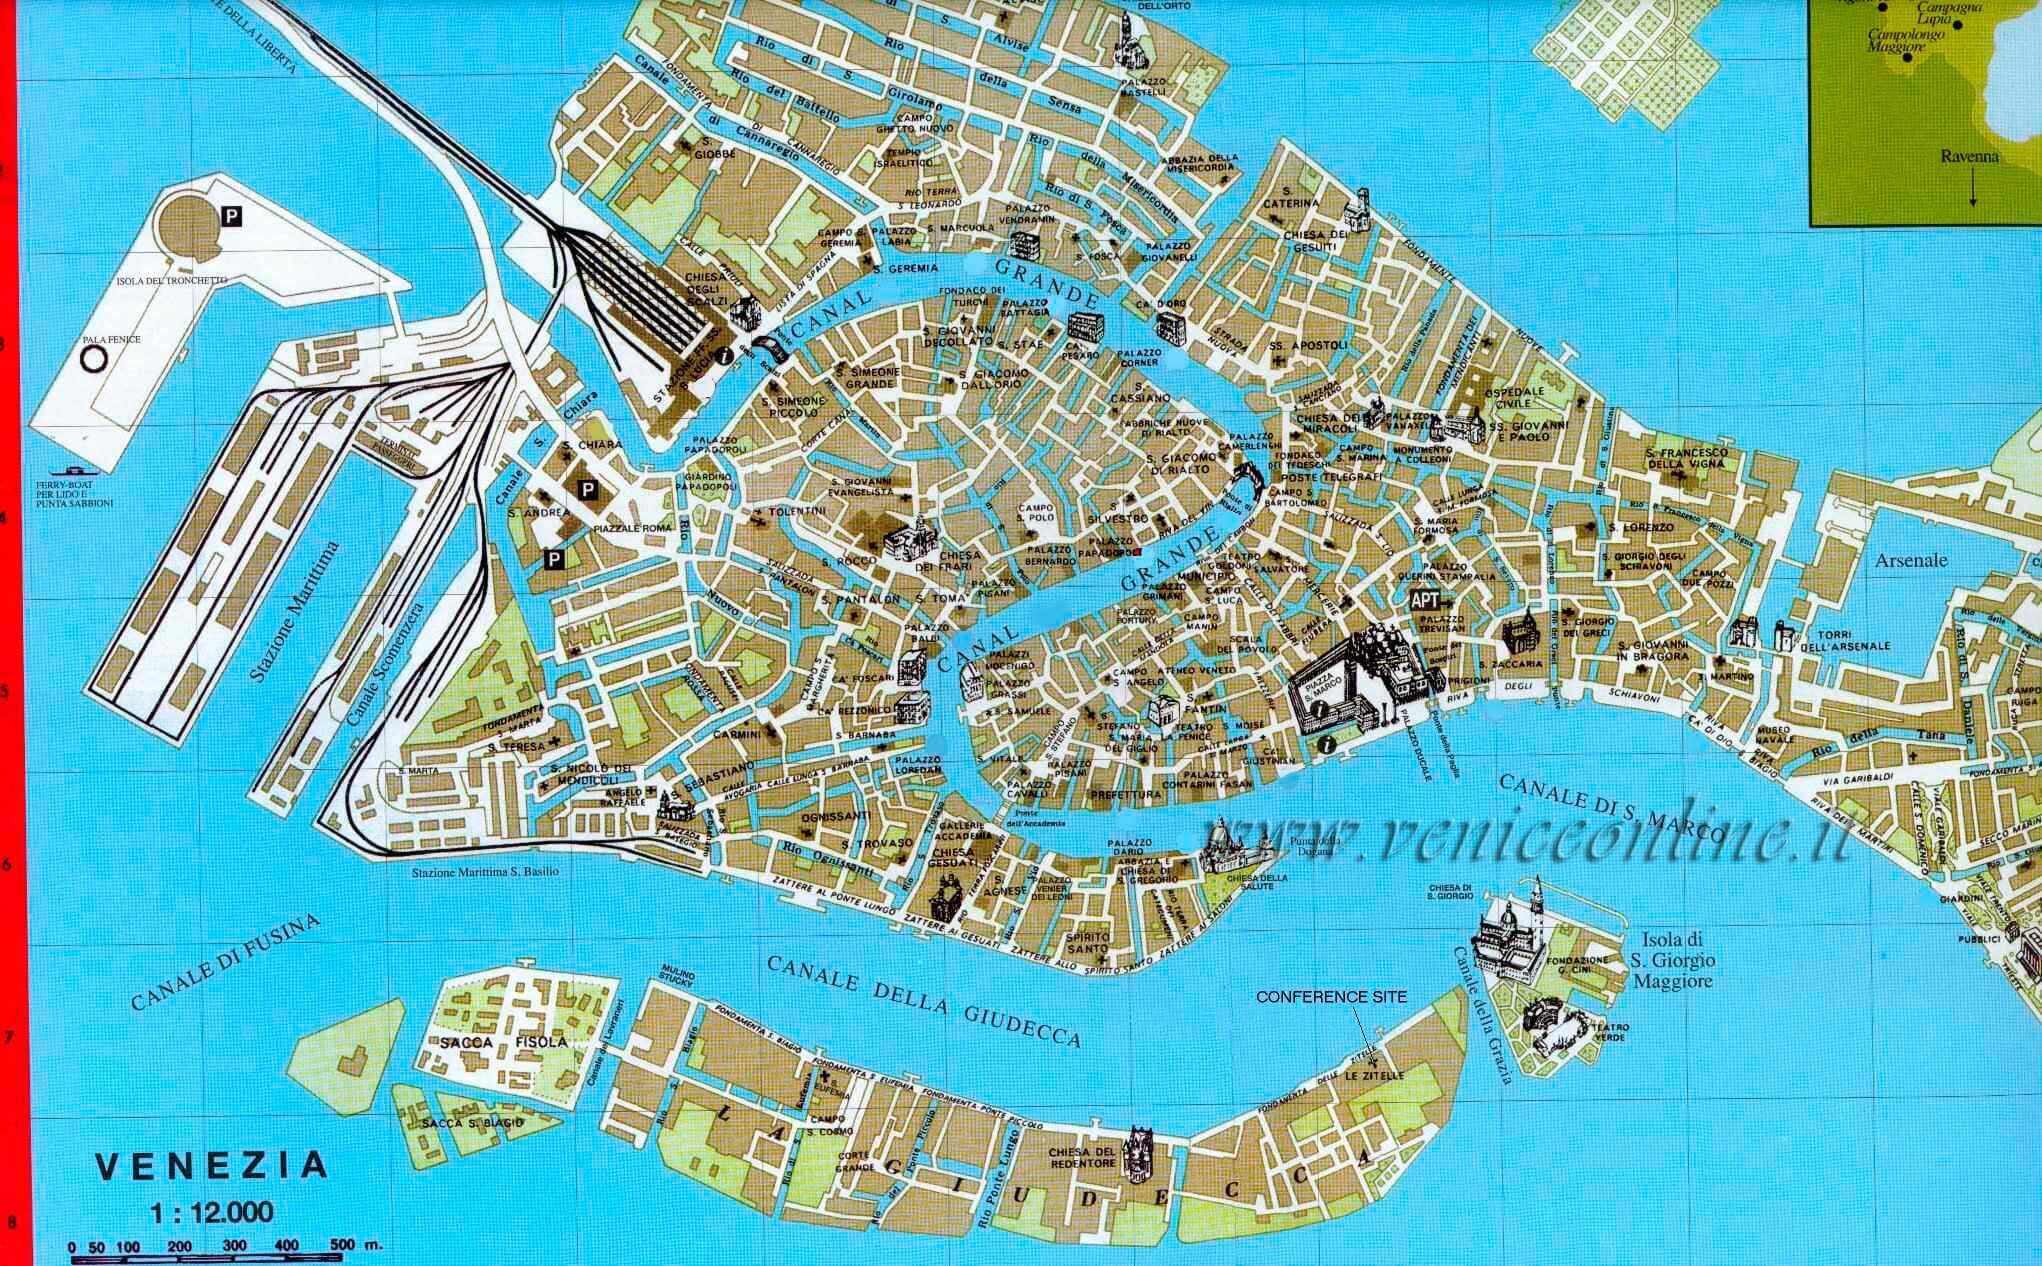 Venice canal plan